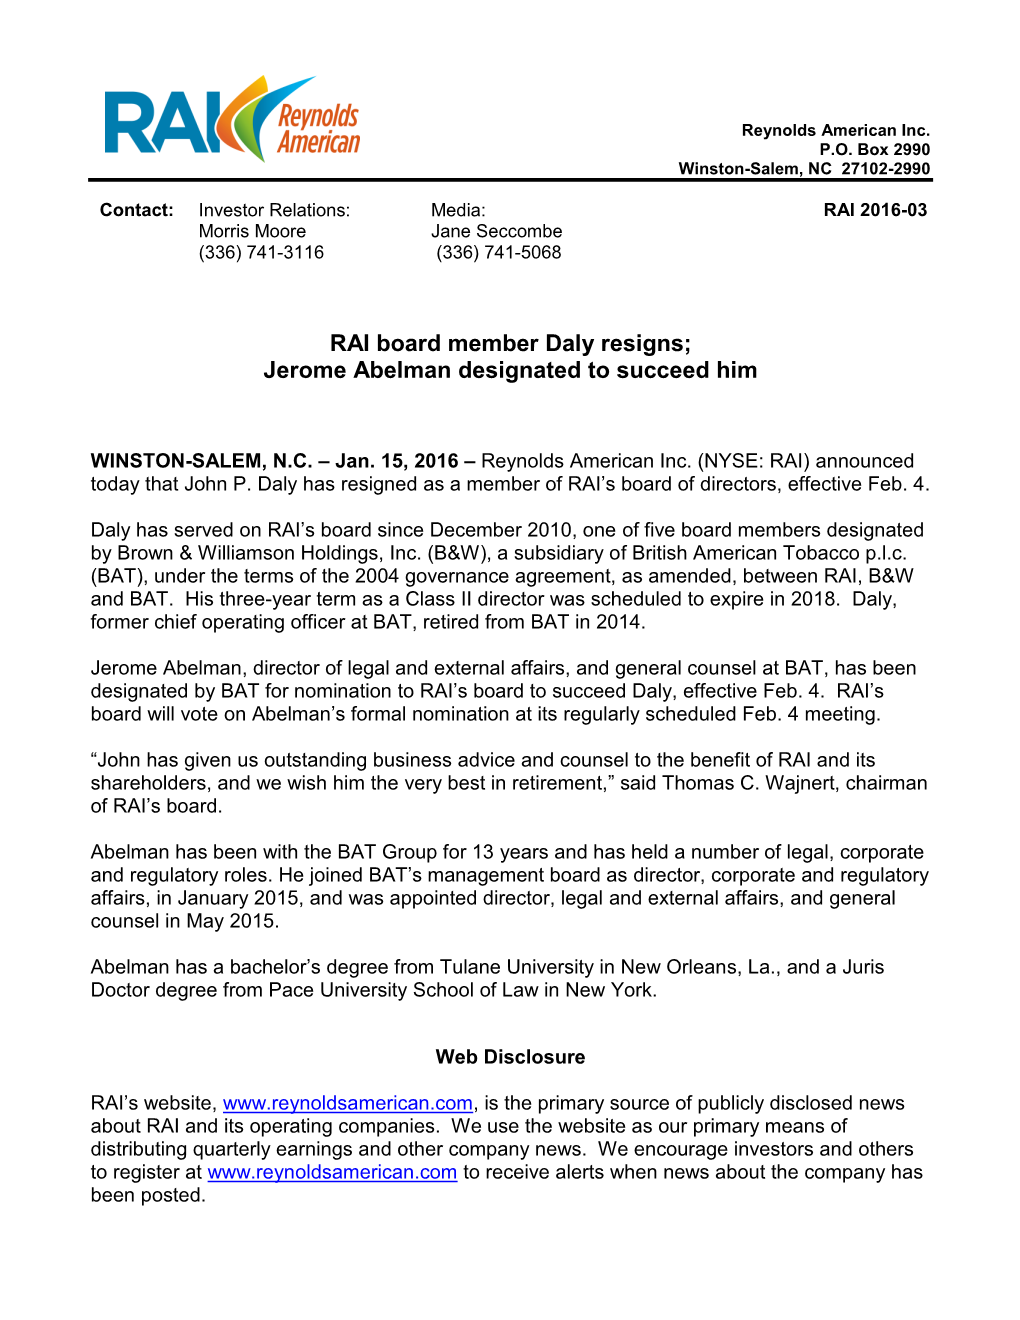 RAI Board Member Daly Resigns; Jerome Abelman Designated to Succeed Him